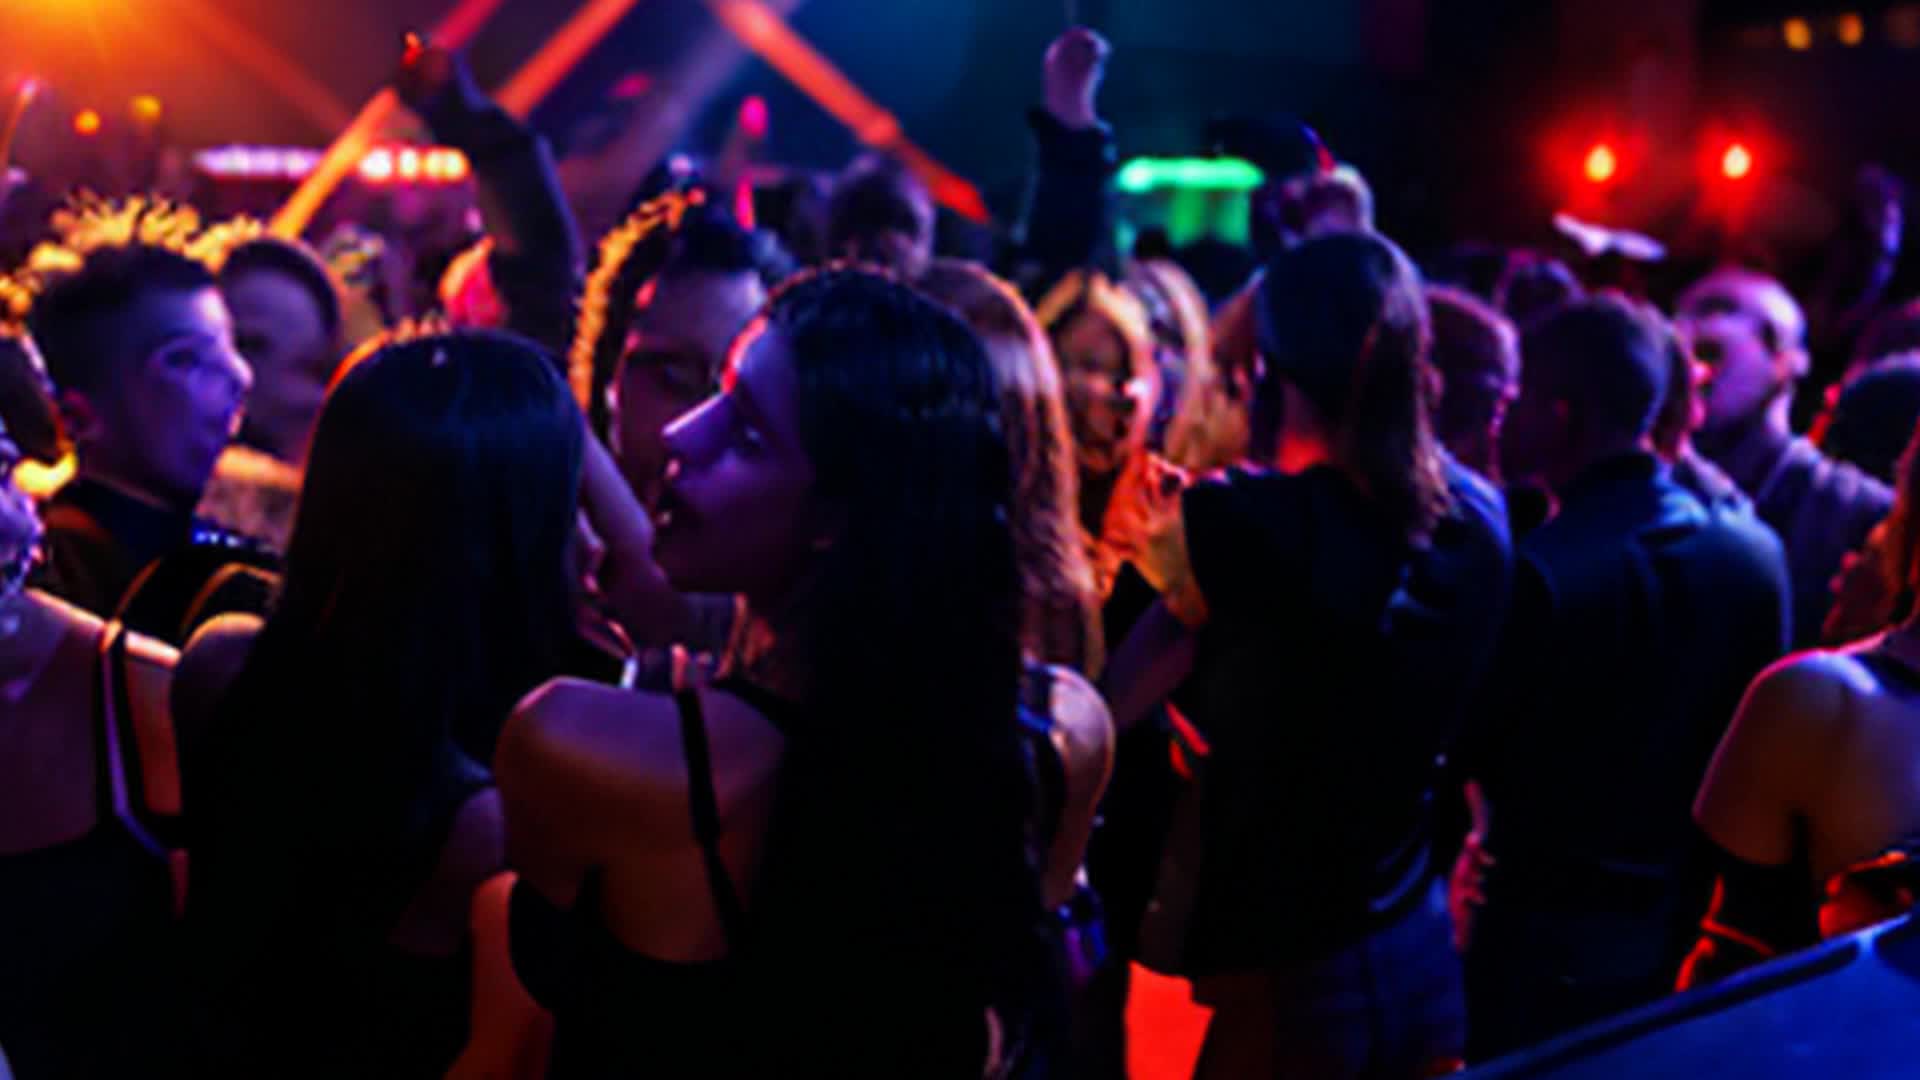 nightclub scene, lots of people dancing, bright neon lights